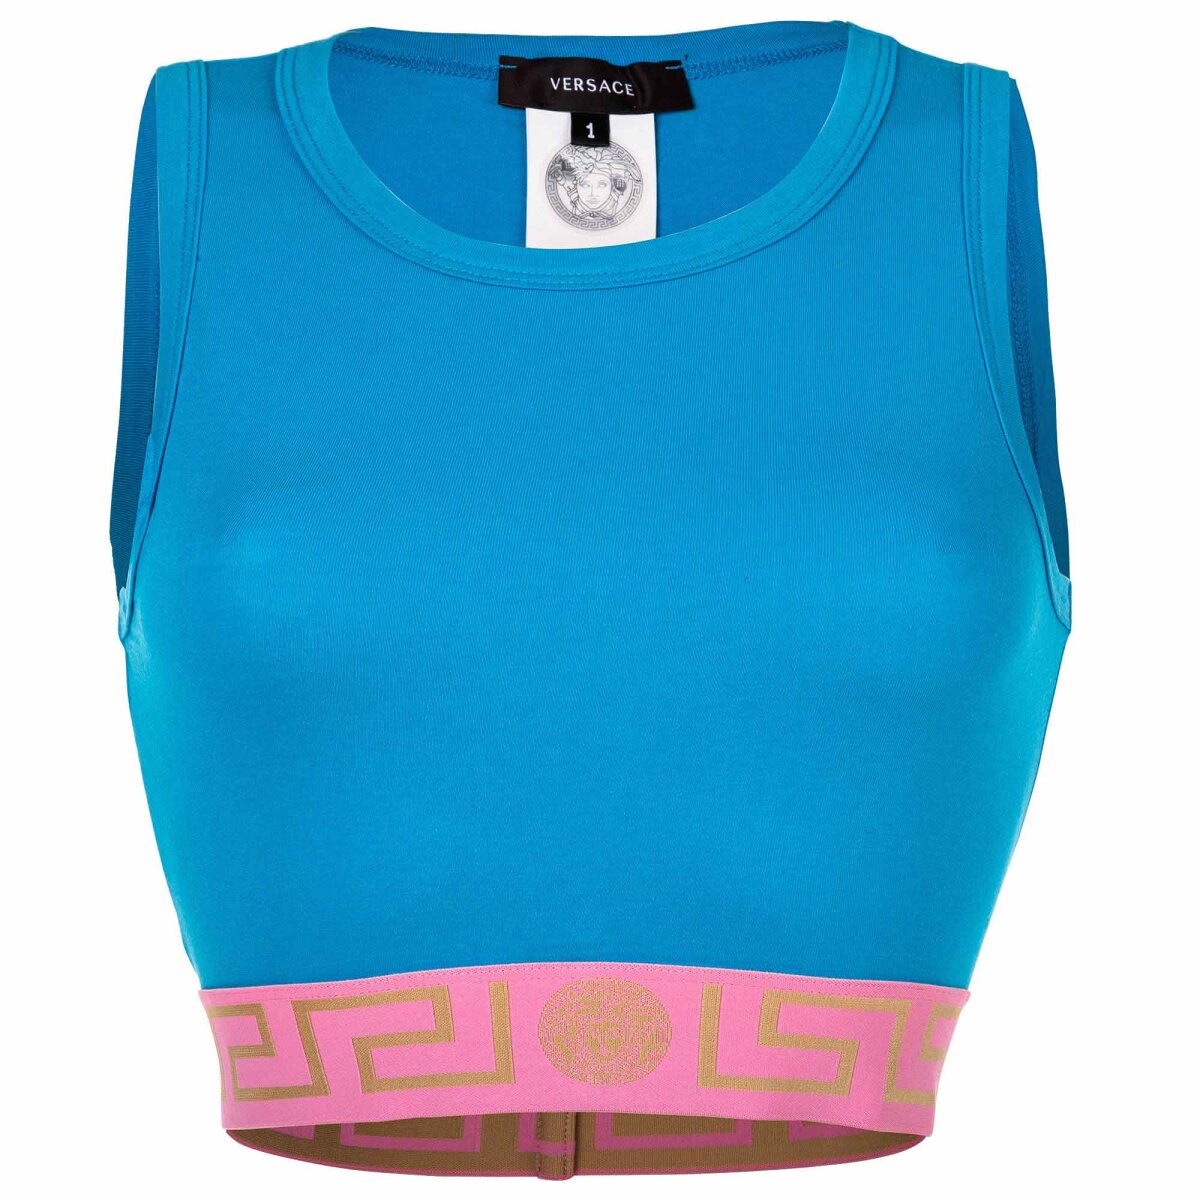 Versace Underwear sport bras for Women